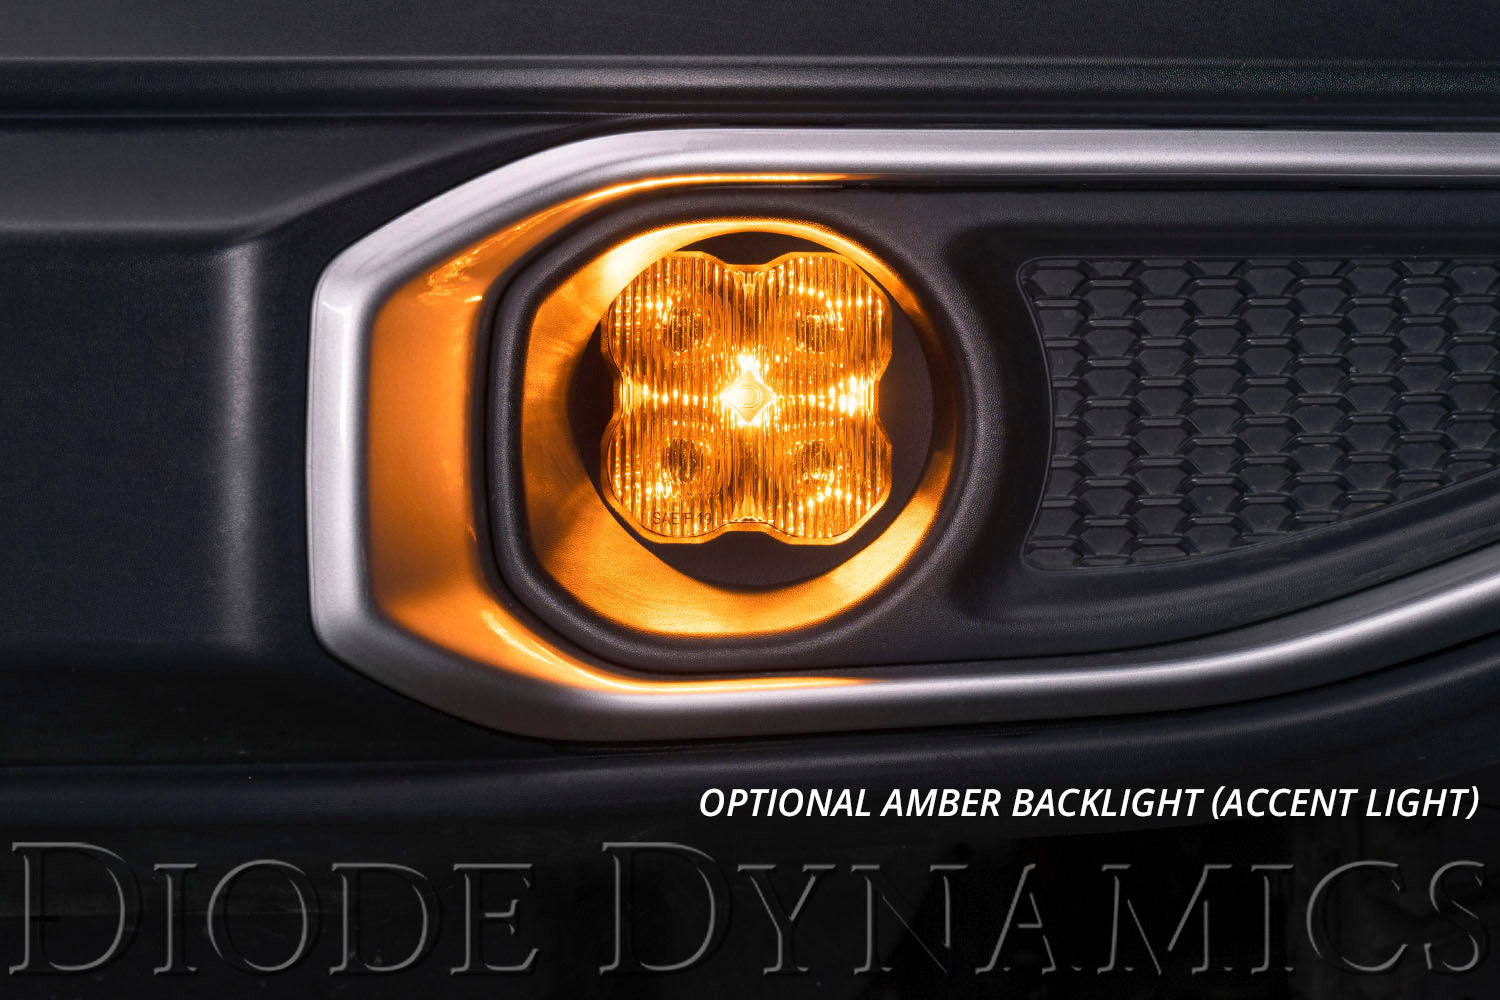 SS3 LED Fog Light Kit for 2010-2014 Subaru Legacy White SAE Fog Pro Diode Dynamics